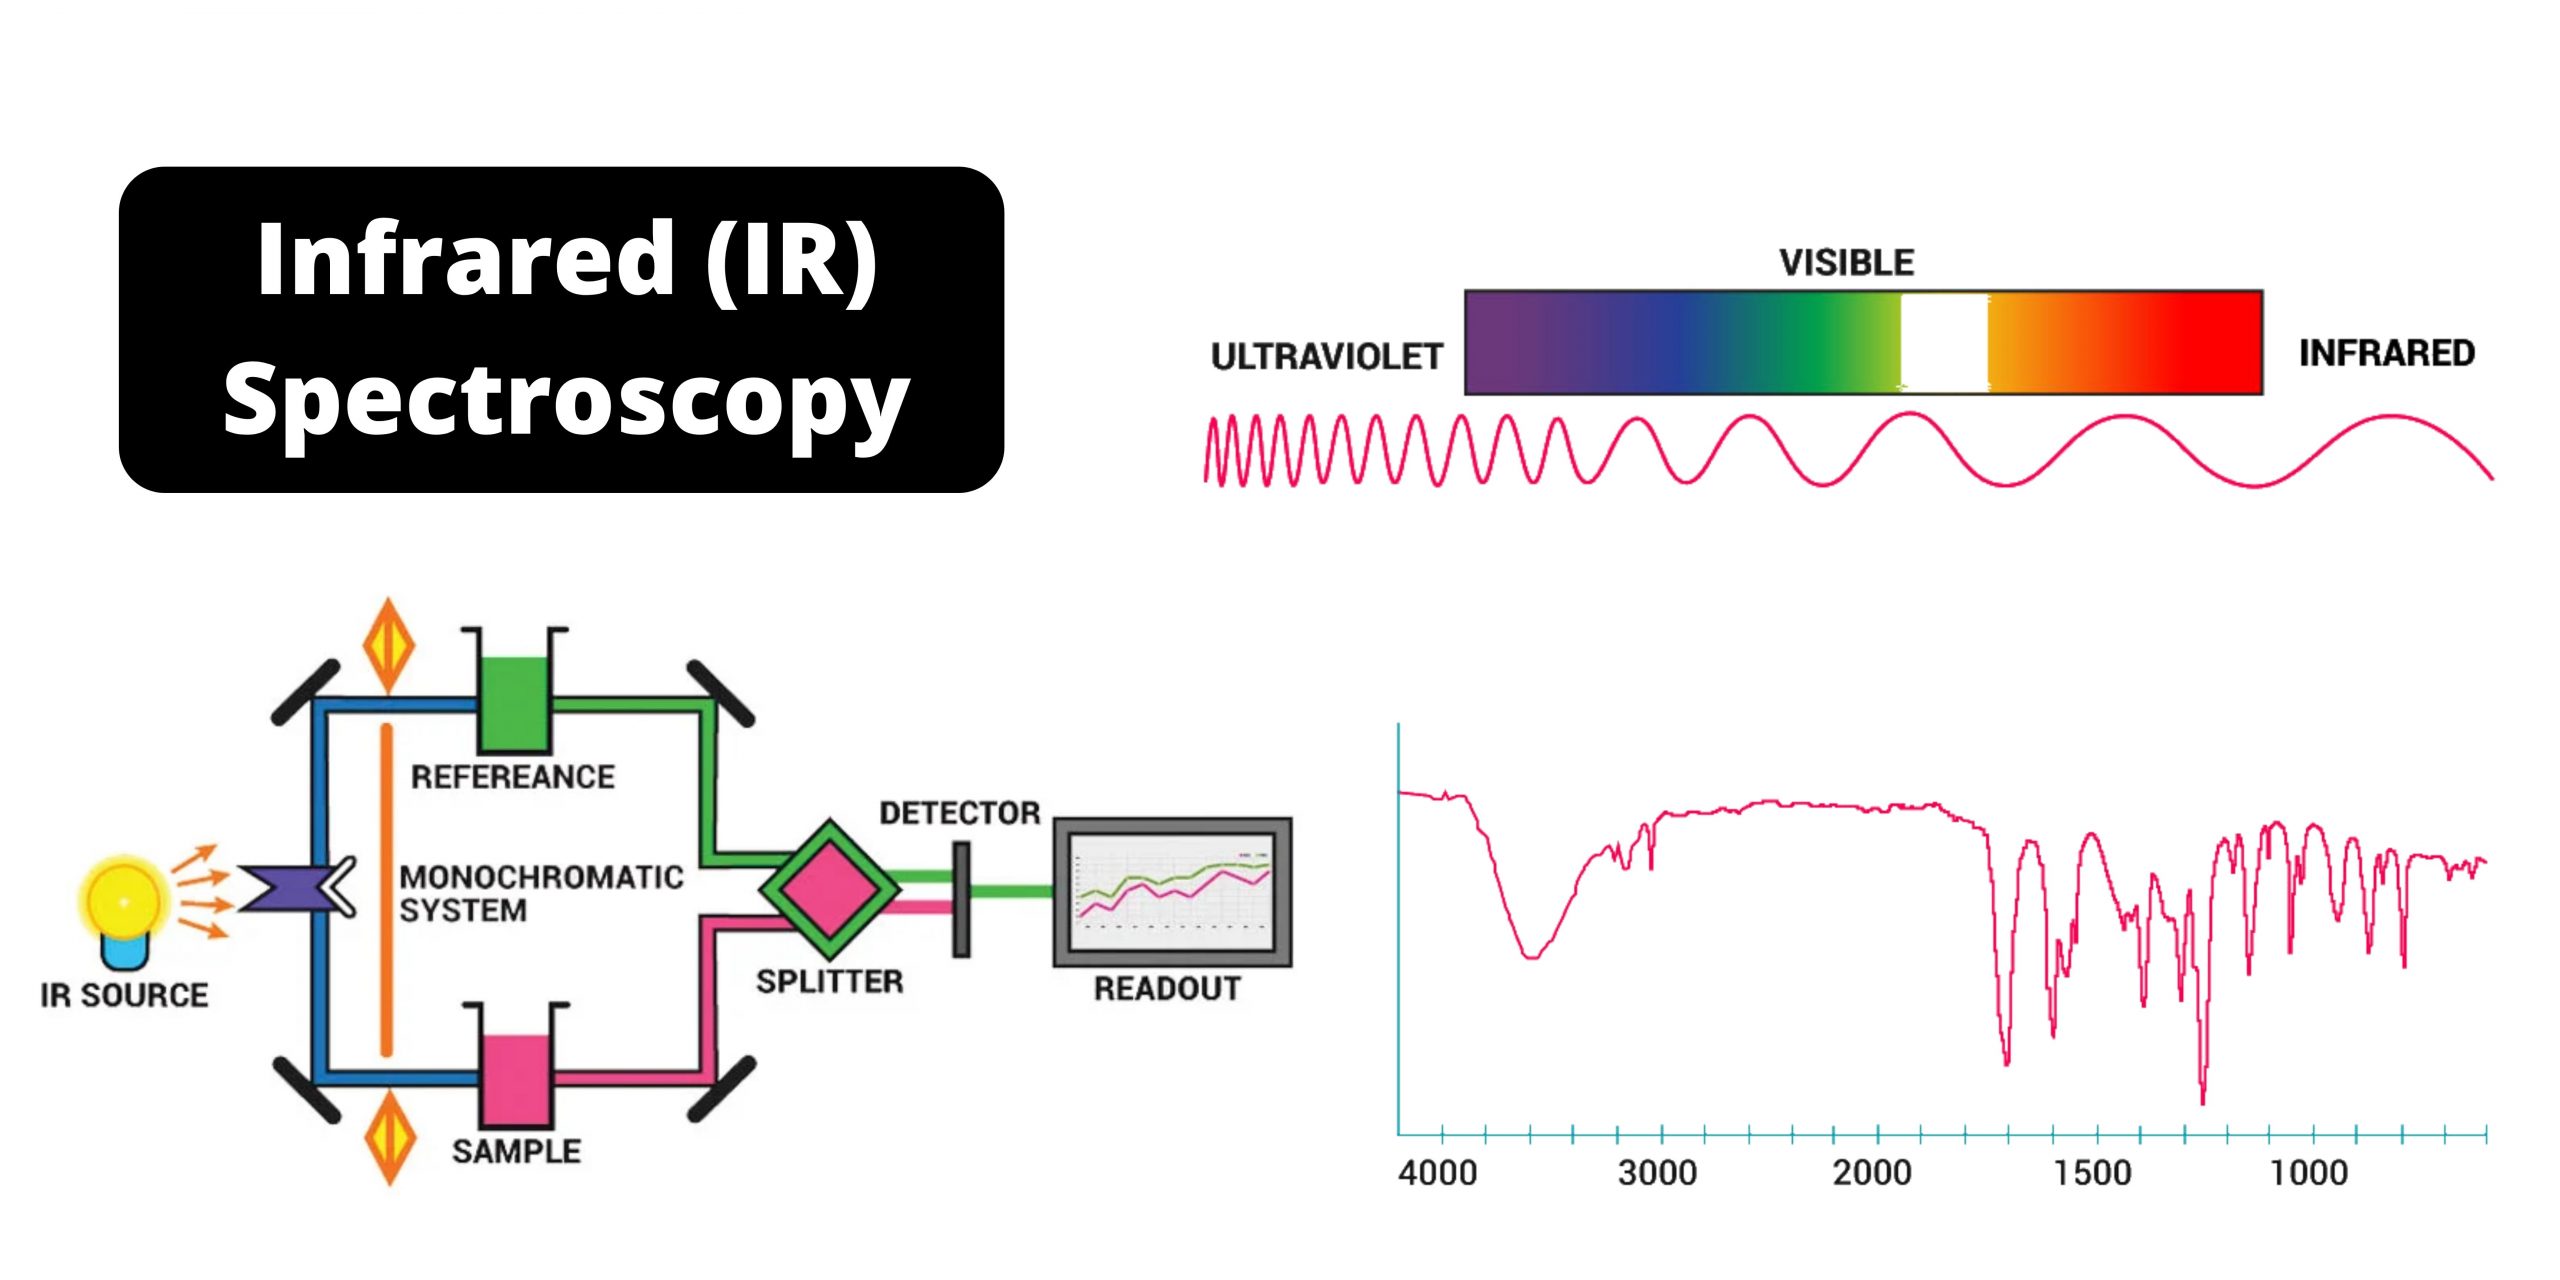 Infrared (IR) Spectroscopy Principle, Instrumentation, Application